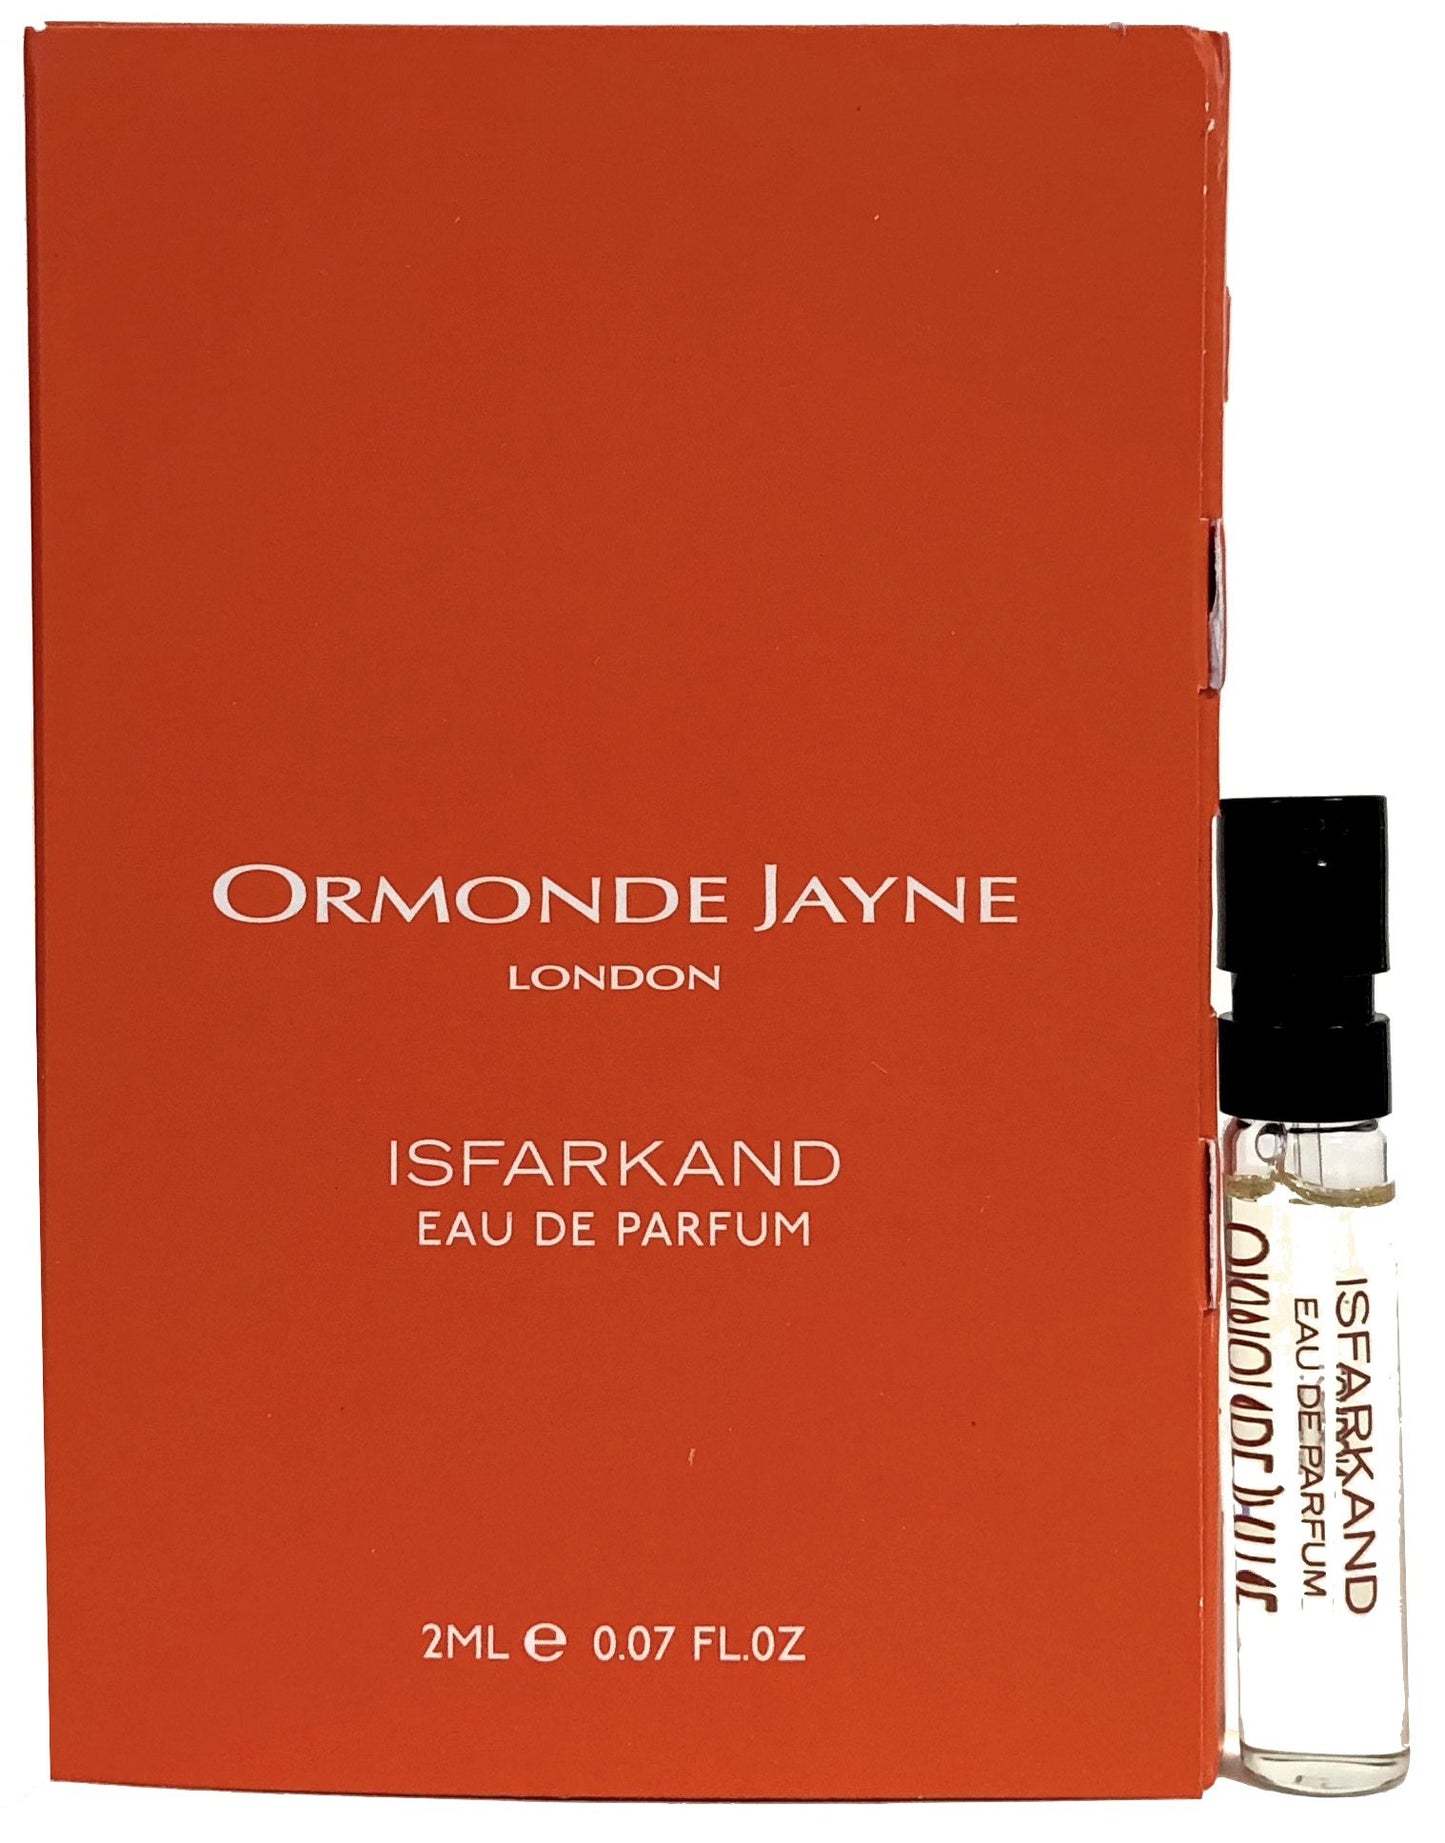 Ormonde Jayne Isfarkand 2ml hivatalos parfüm minták